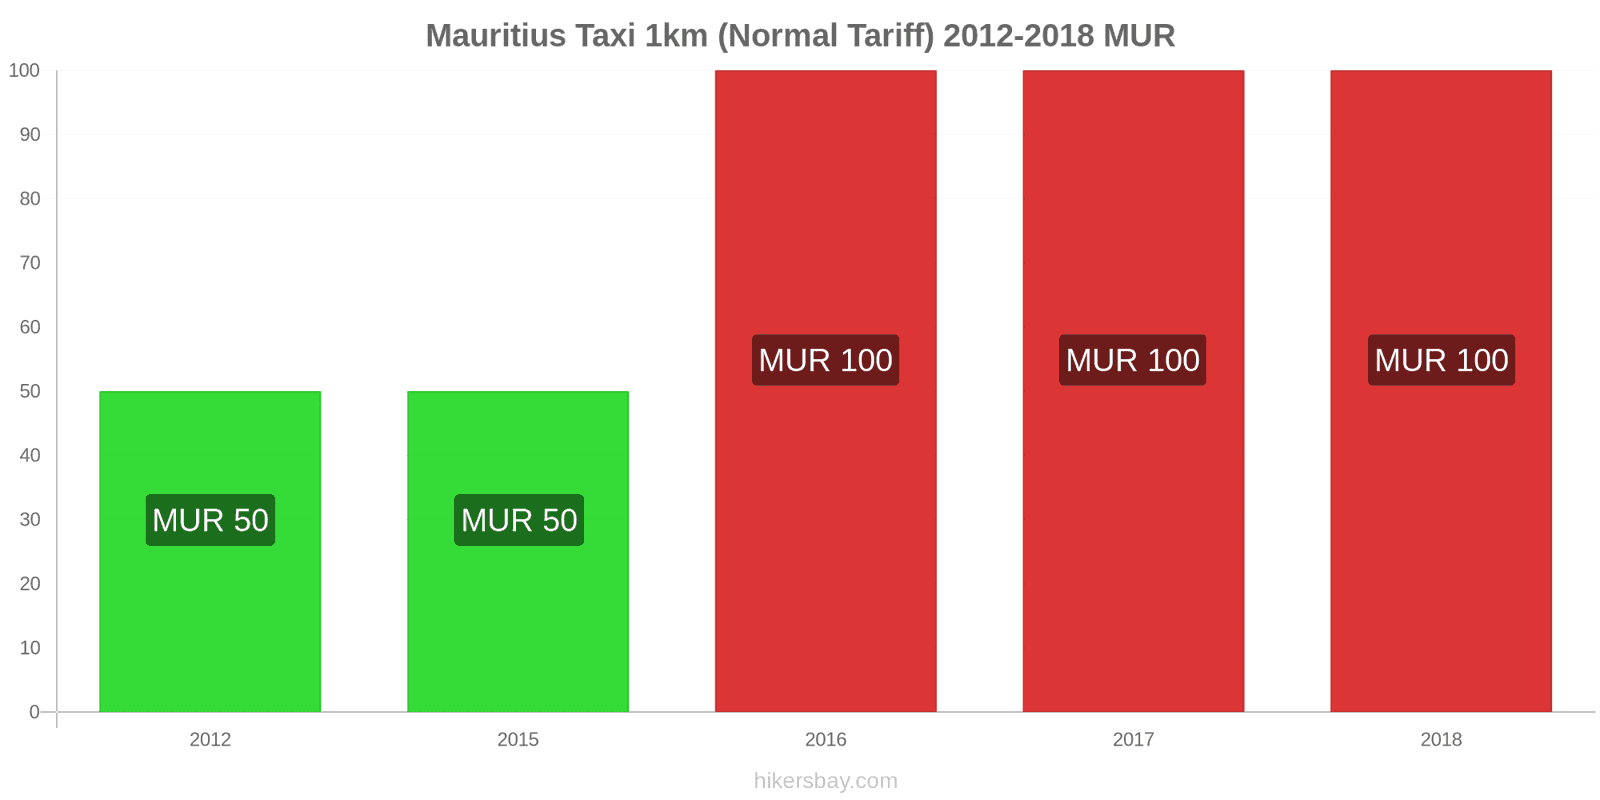 Mauritius price changes Taxi 1km (Normal Tariff) hikersbay.com